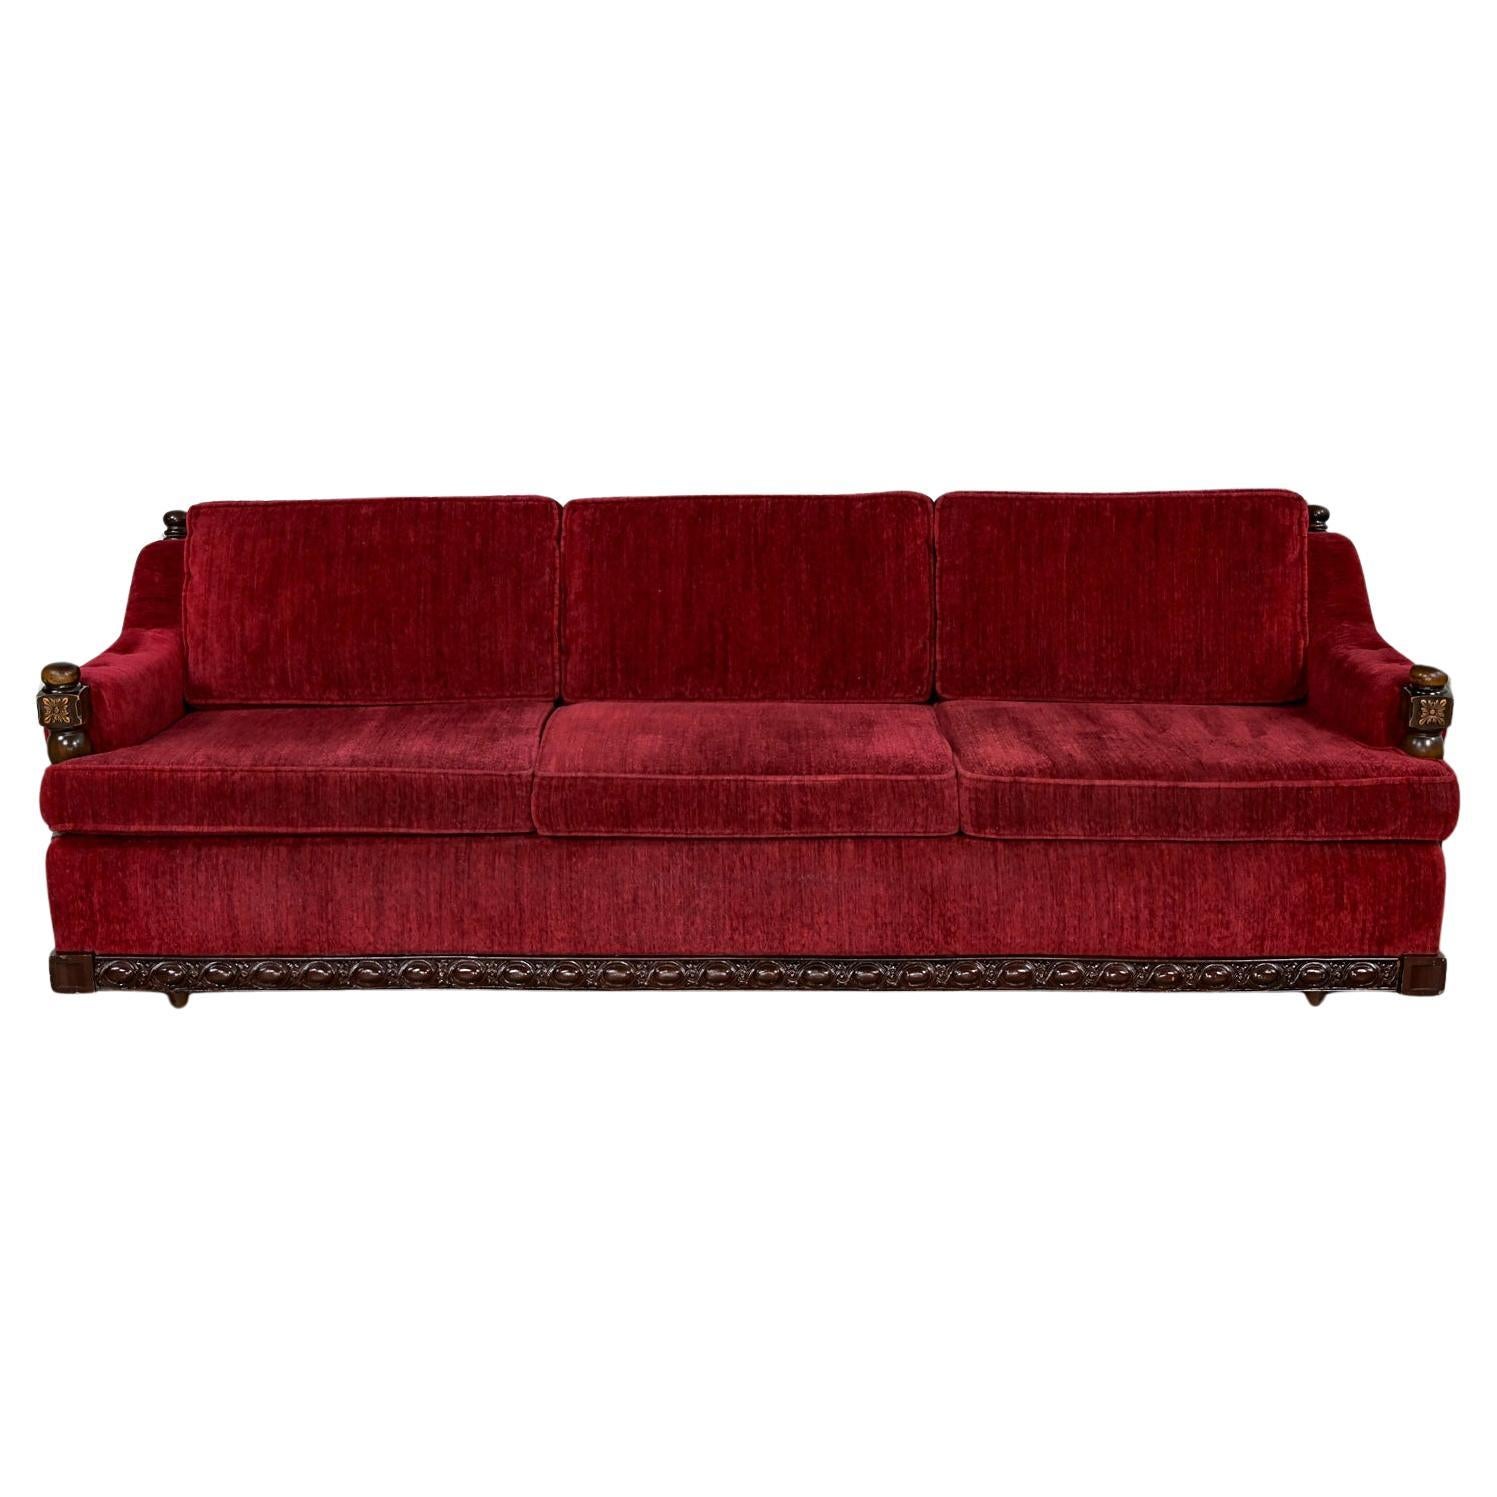 Sofa de style néo-espagnol espagnol rouge rustique des années 1970, Artes De Mexico Internls